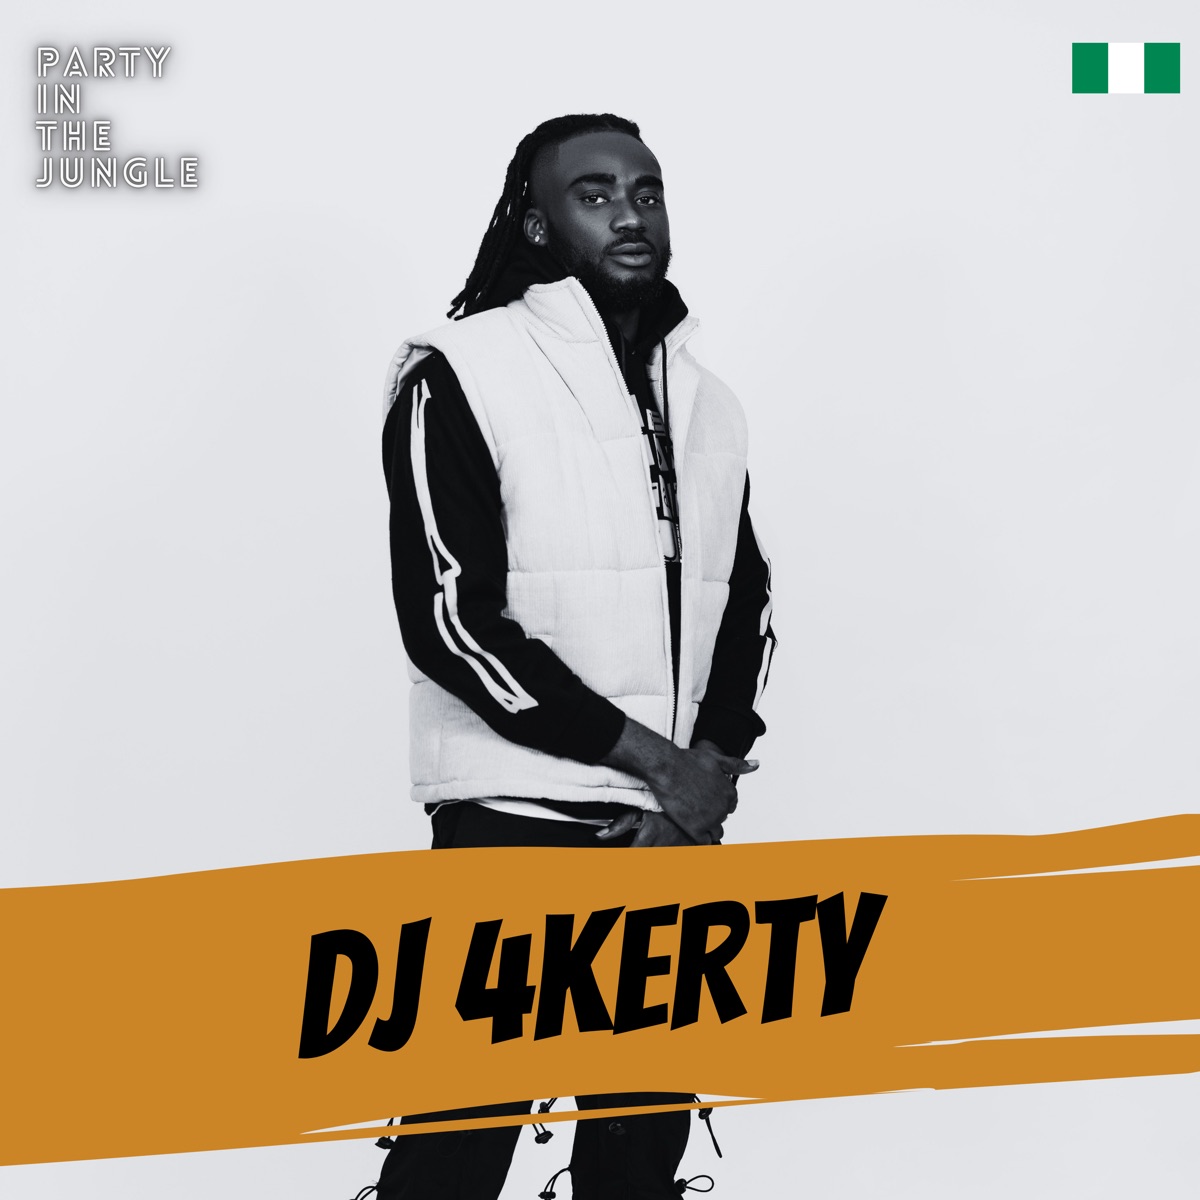 Dj 4kerty - Party In The Jungle: DJ 4kerty, Jan 2023 (DJ Mix)